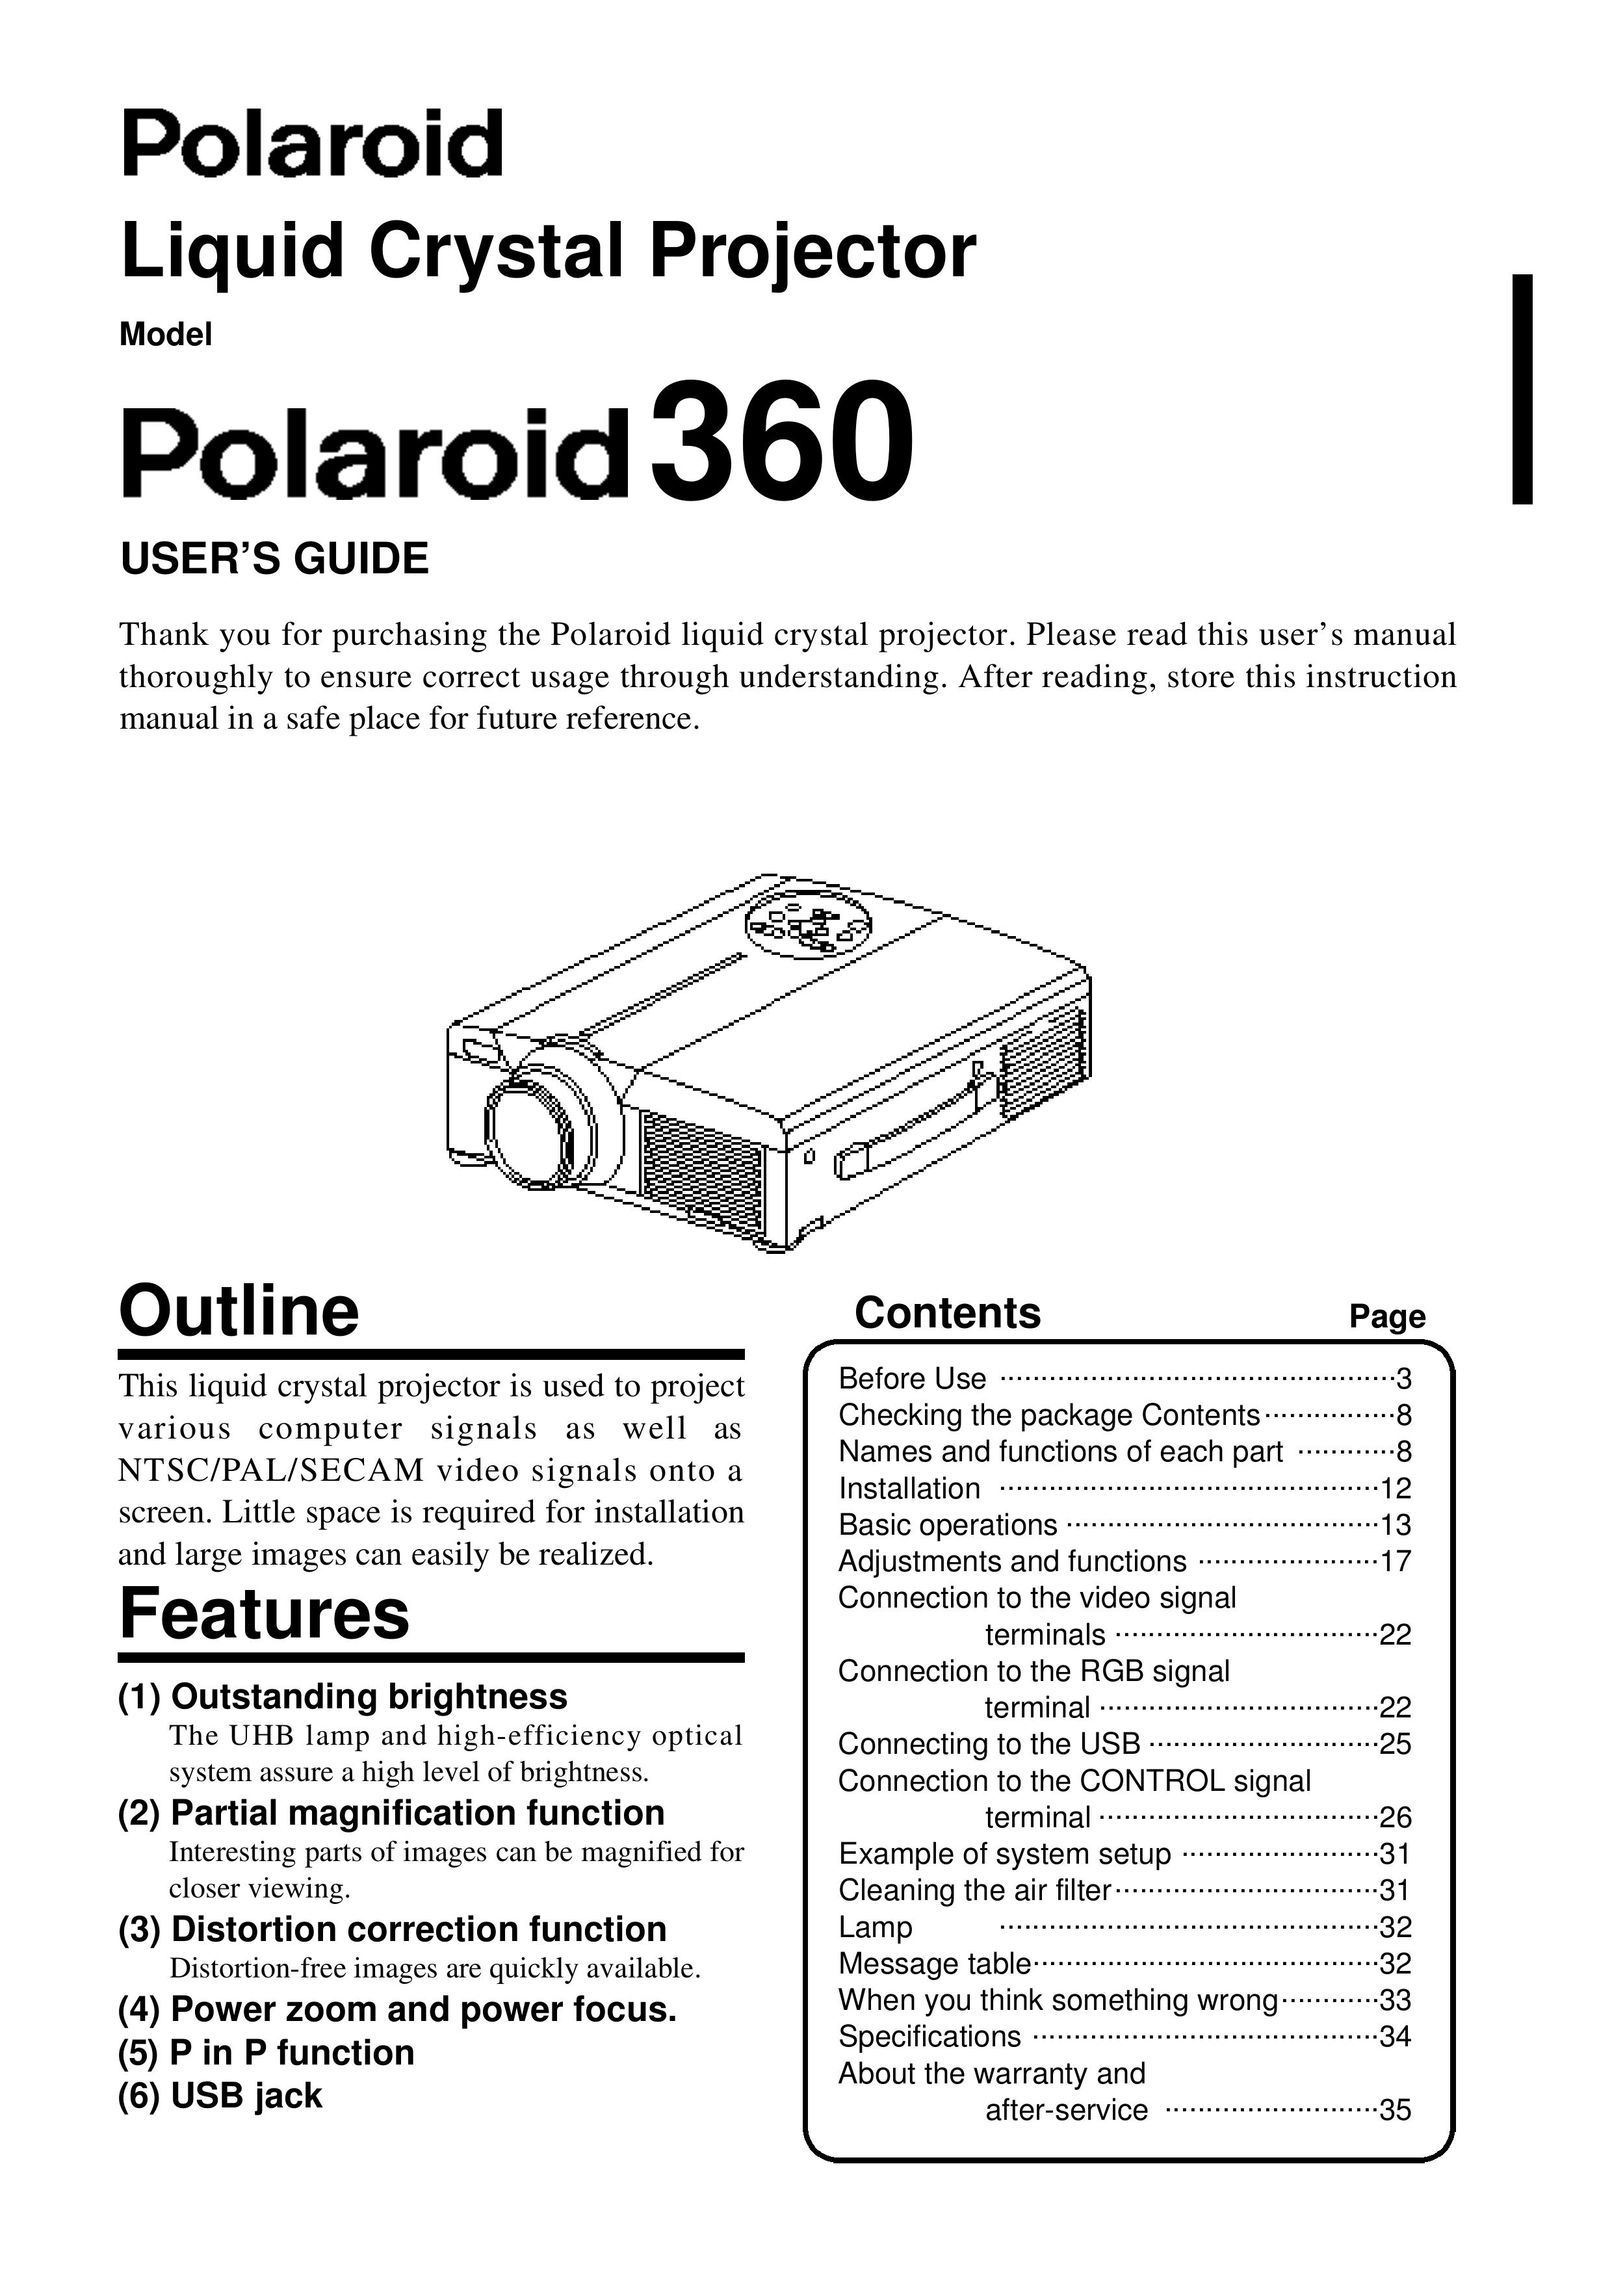 Polaroid PV 360 Projector User Manual